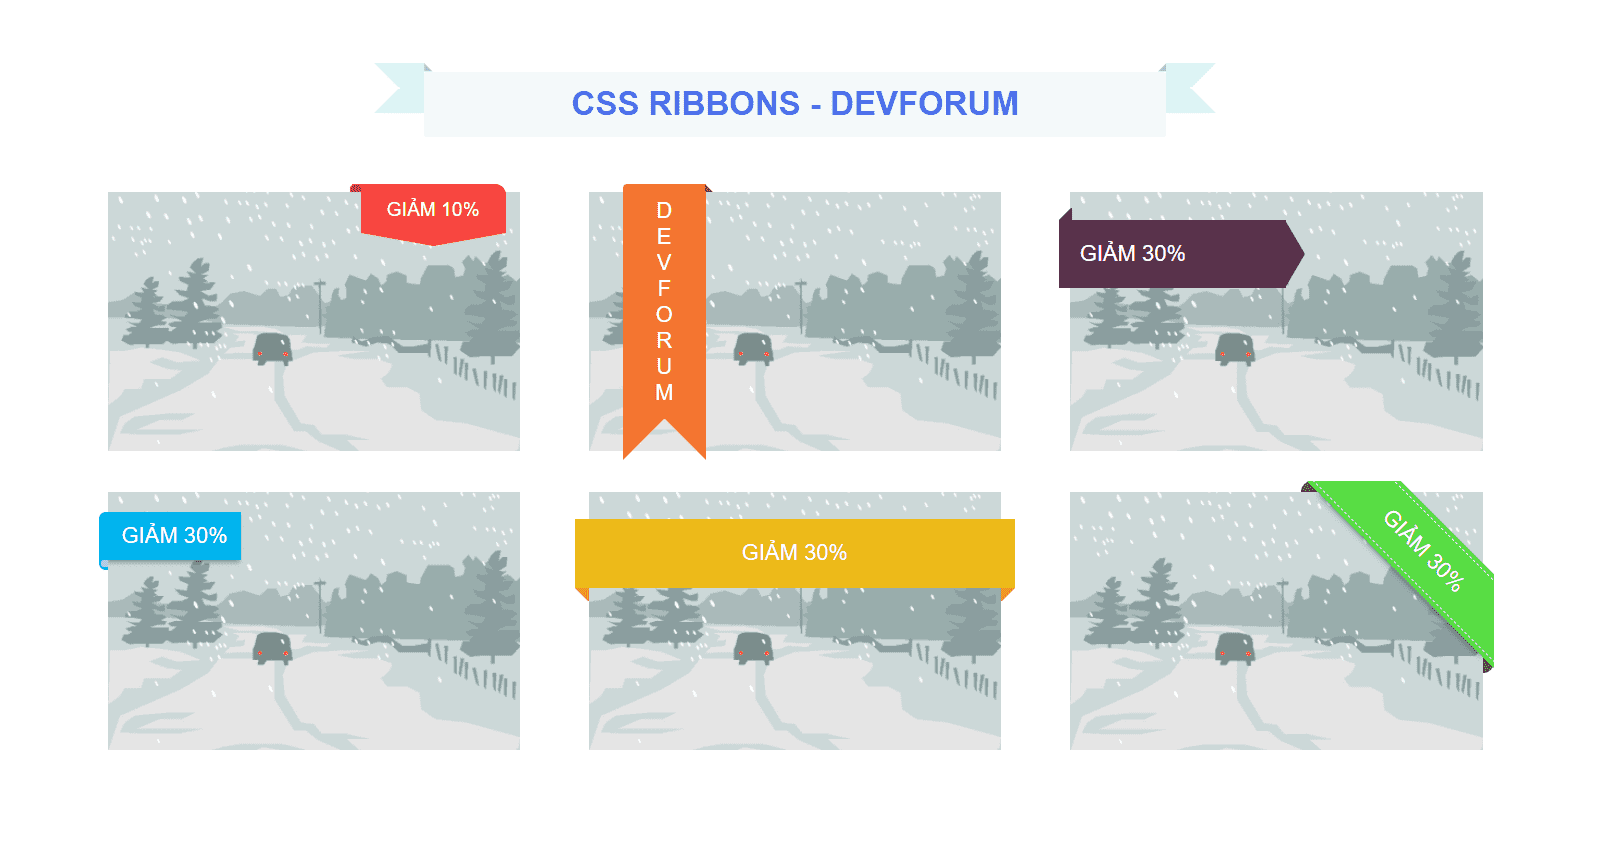 CSS Ribbons Sale label by DevForum